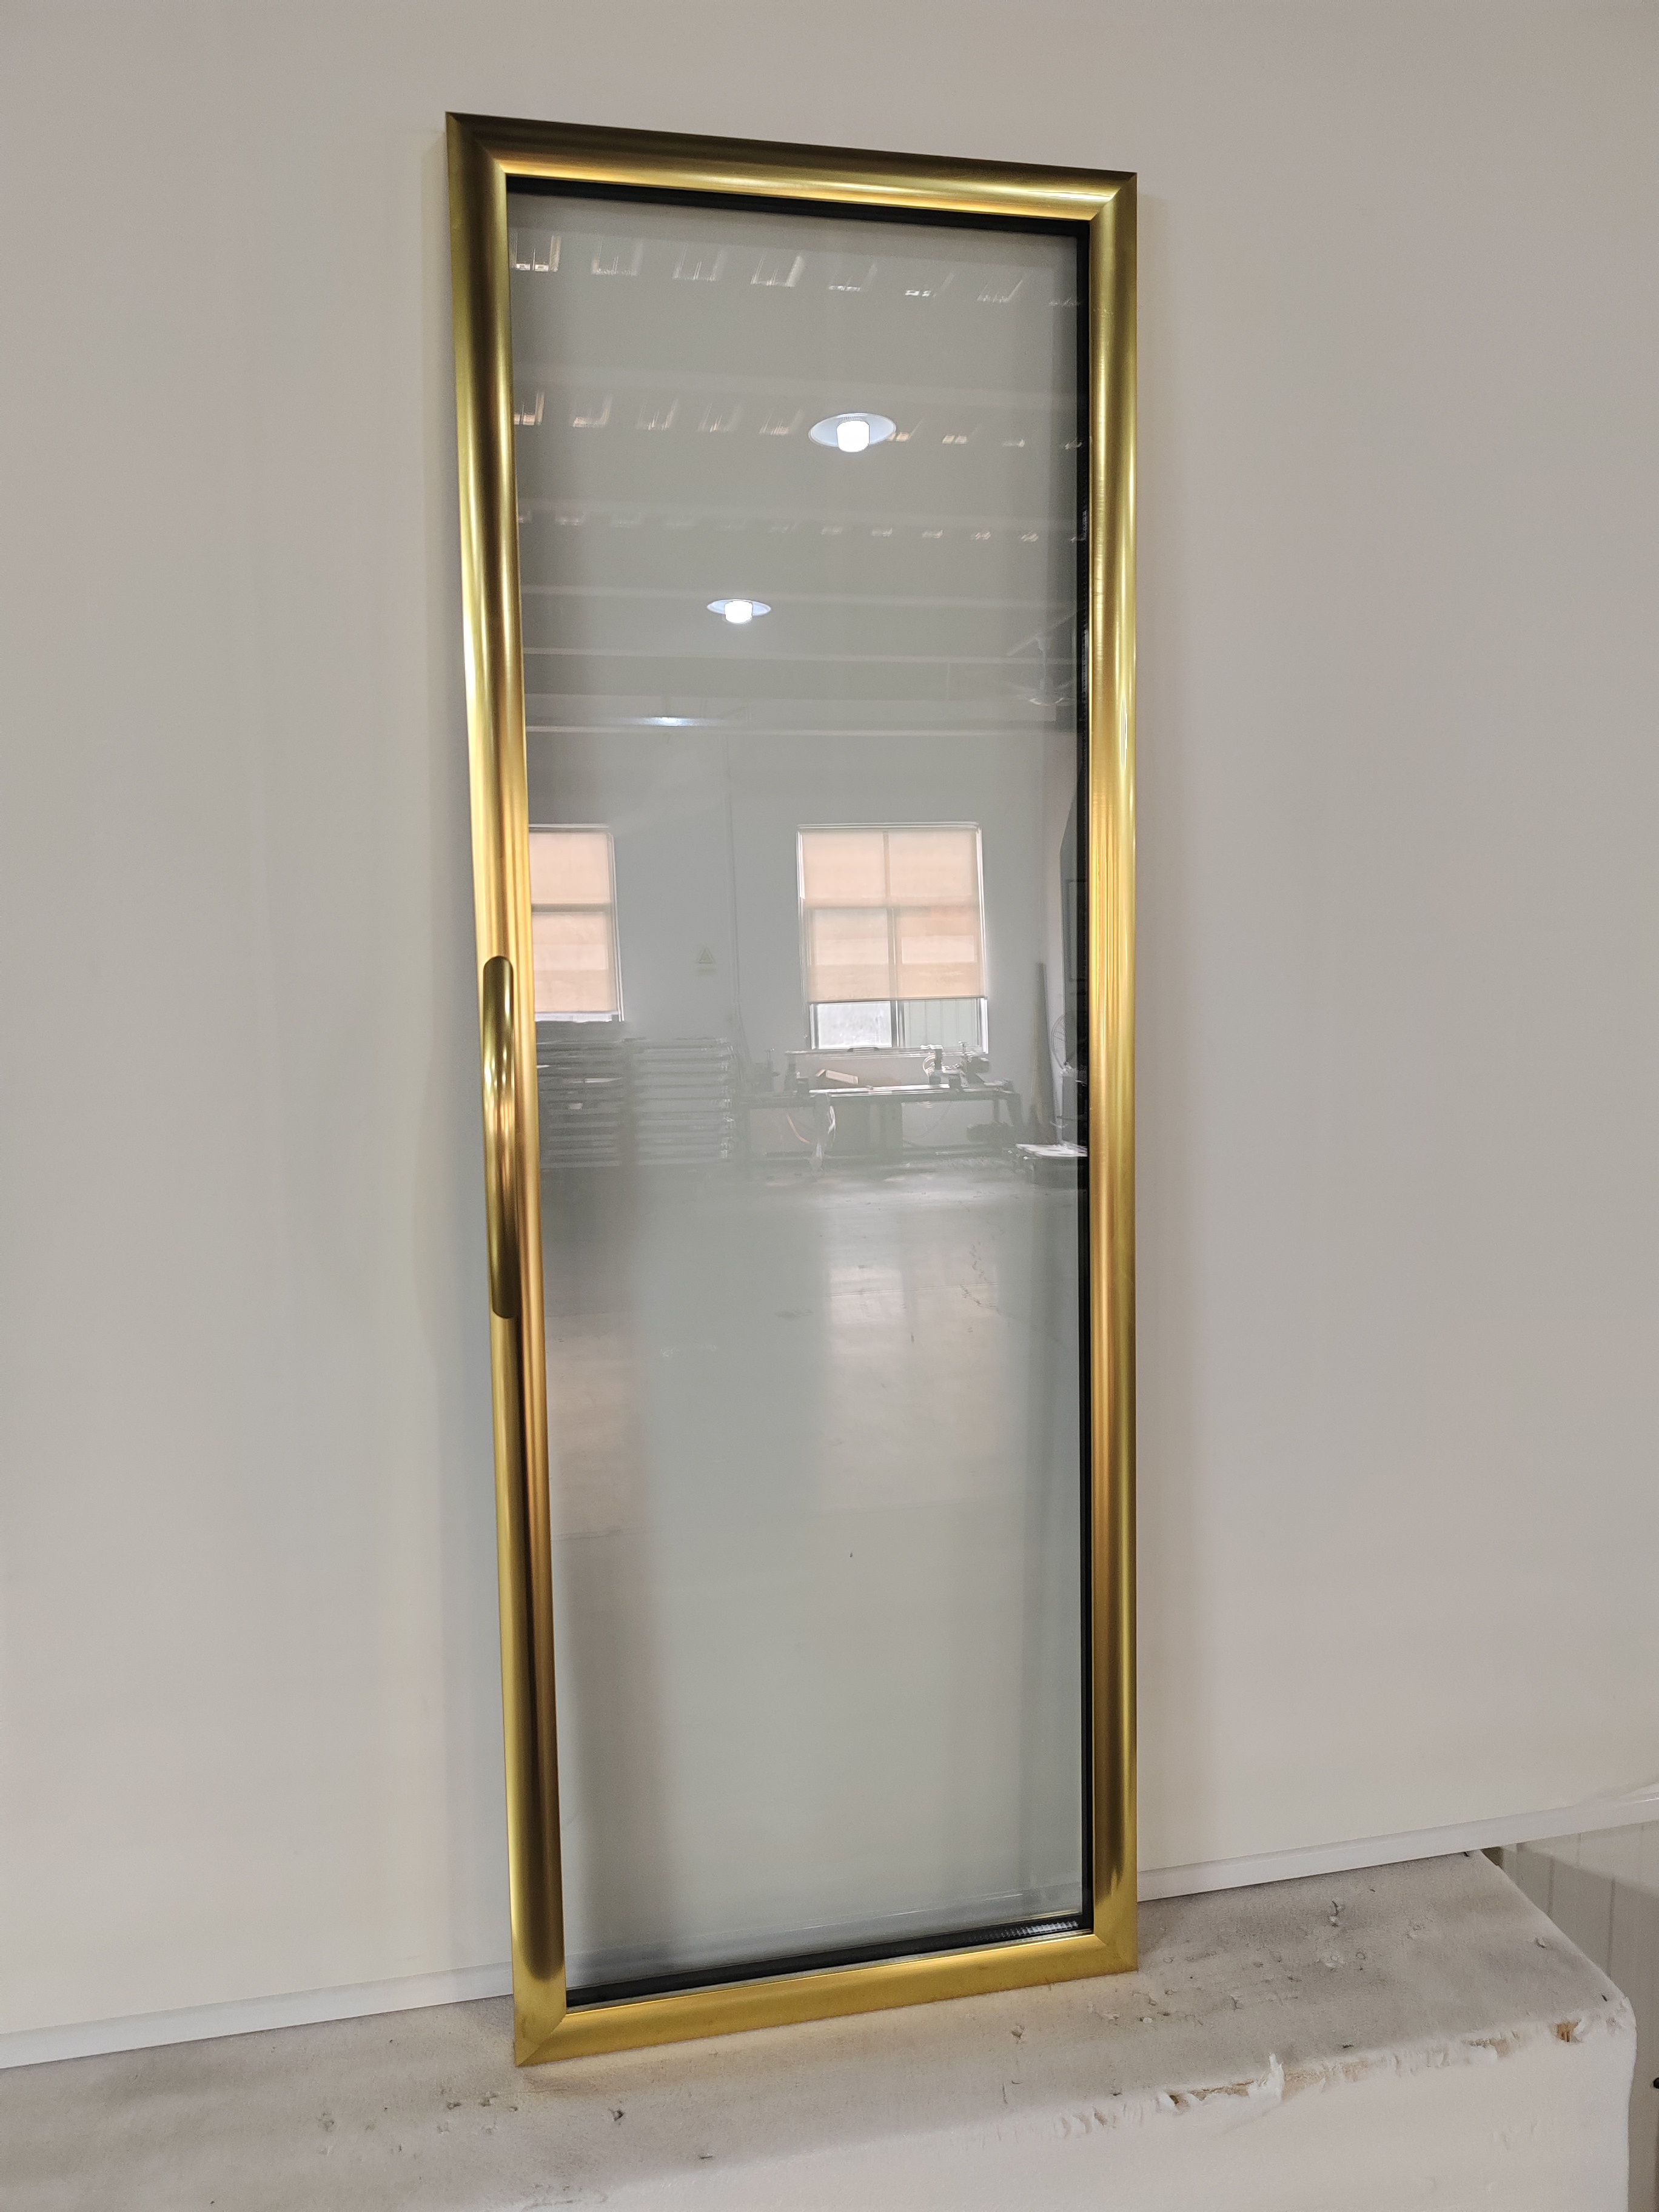 Yuebang Glass' Golden Aluminum Frame Glass Door for Beverage Coolers & More